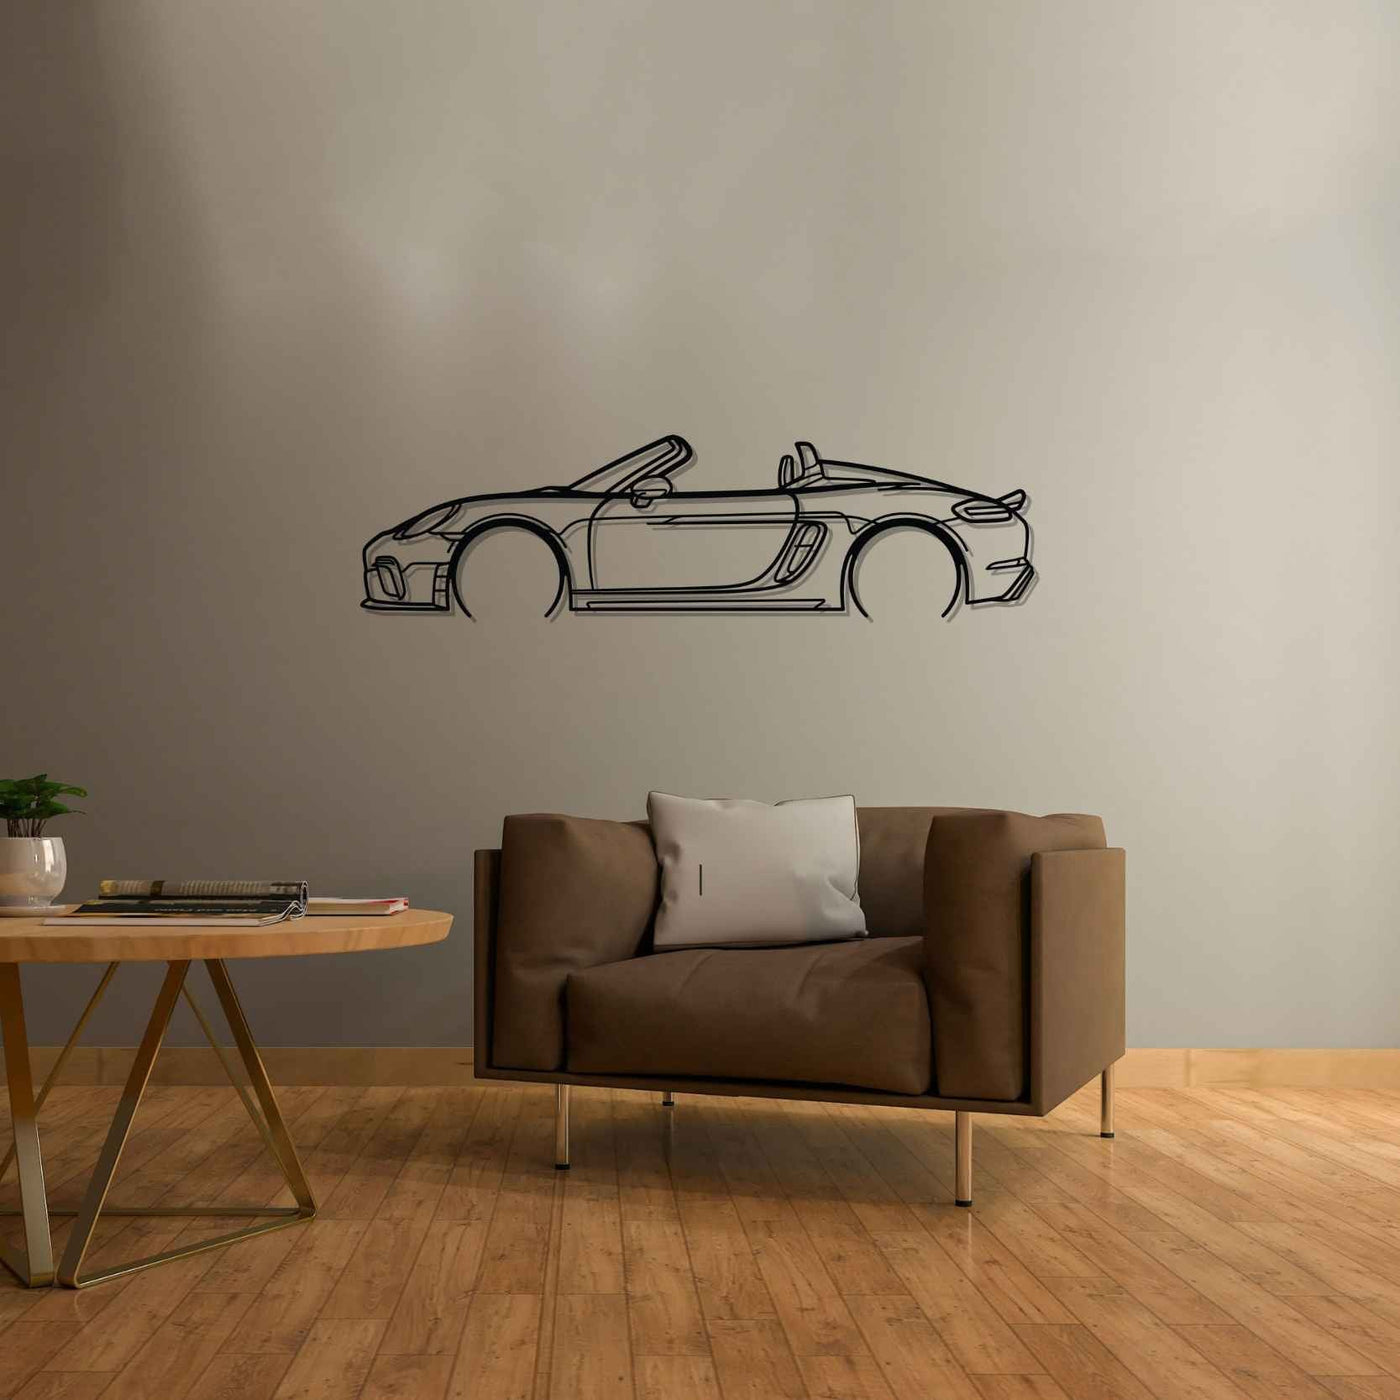 718 Spyder 2020 Detailed Silhouette Metal Wall Art